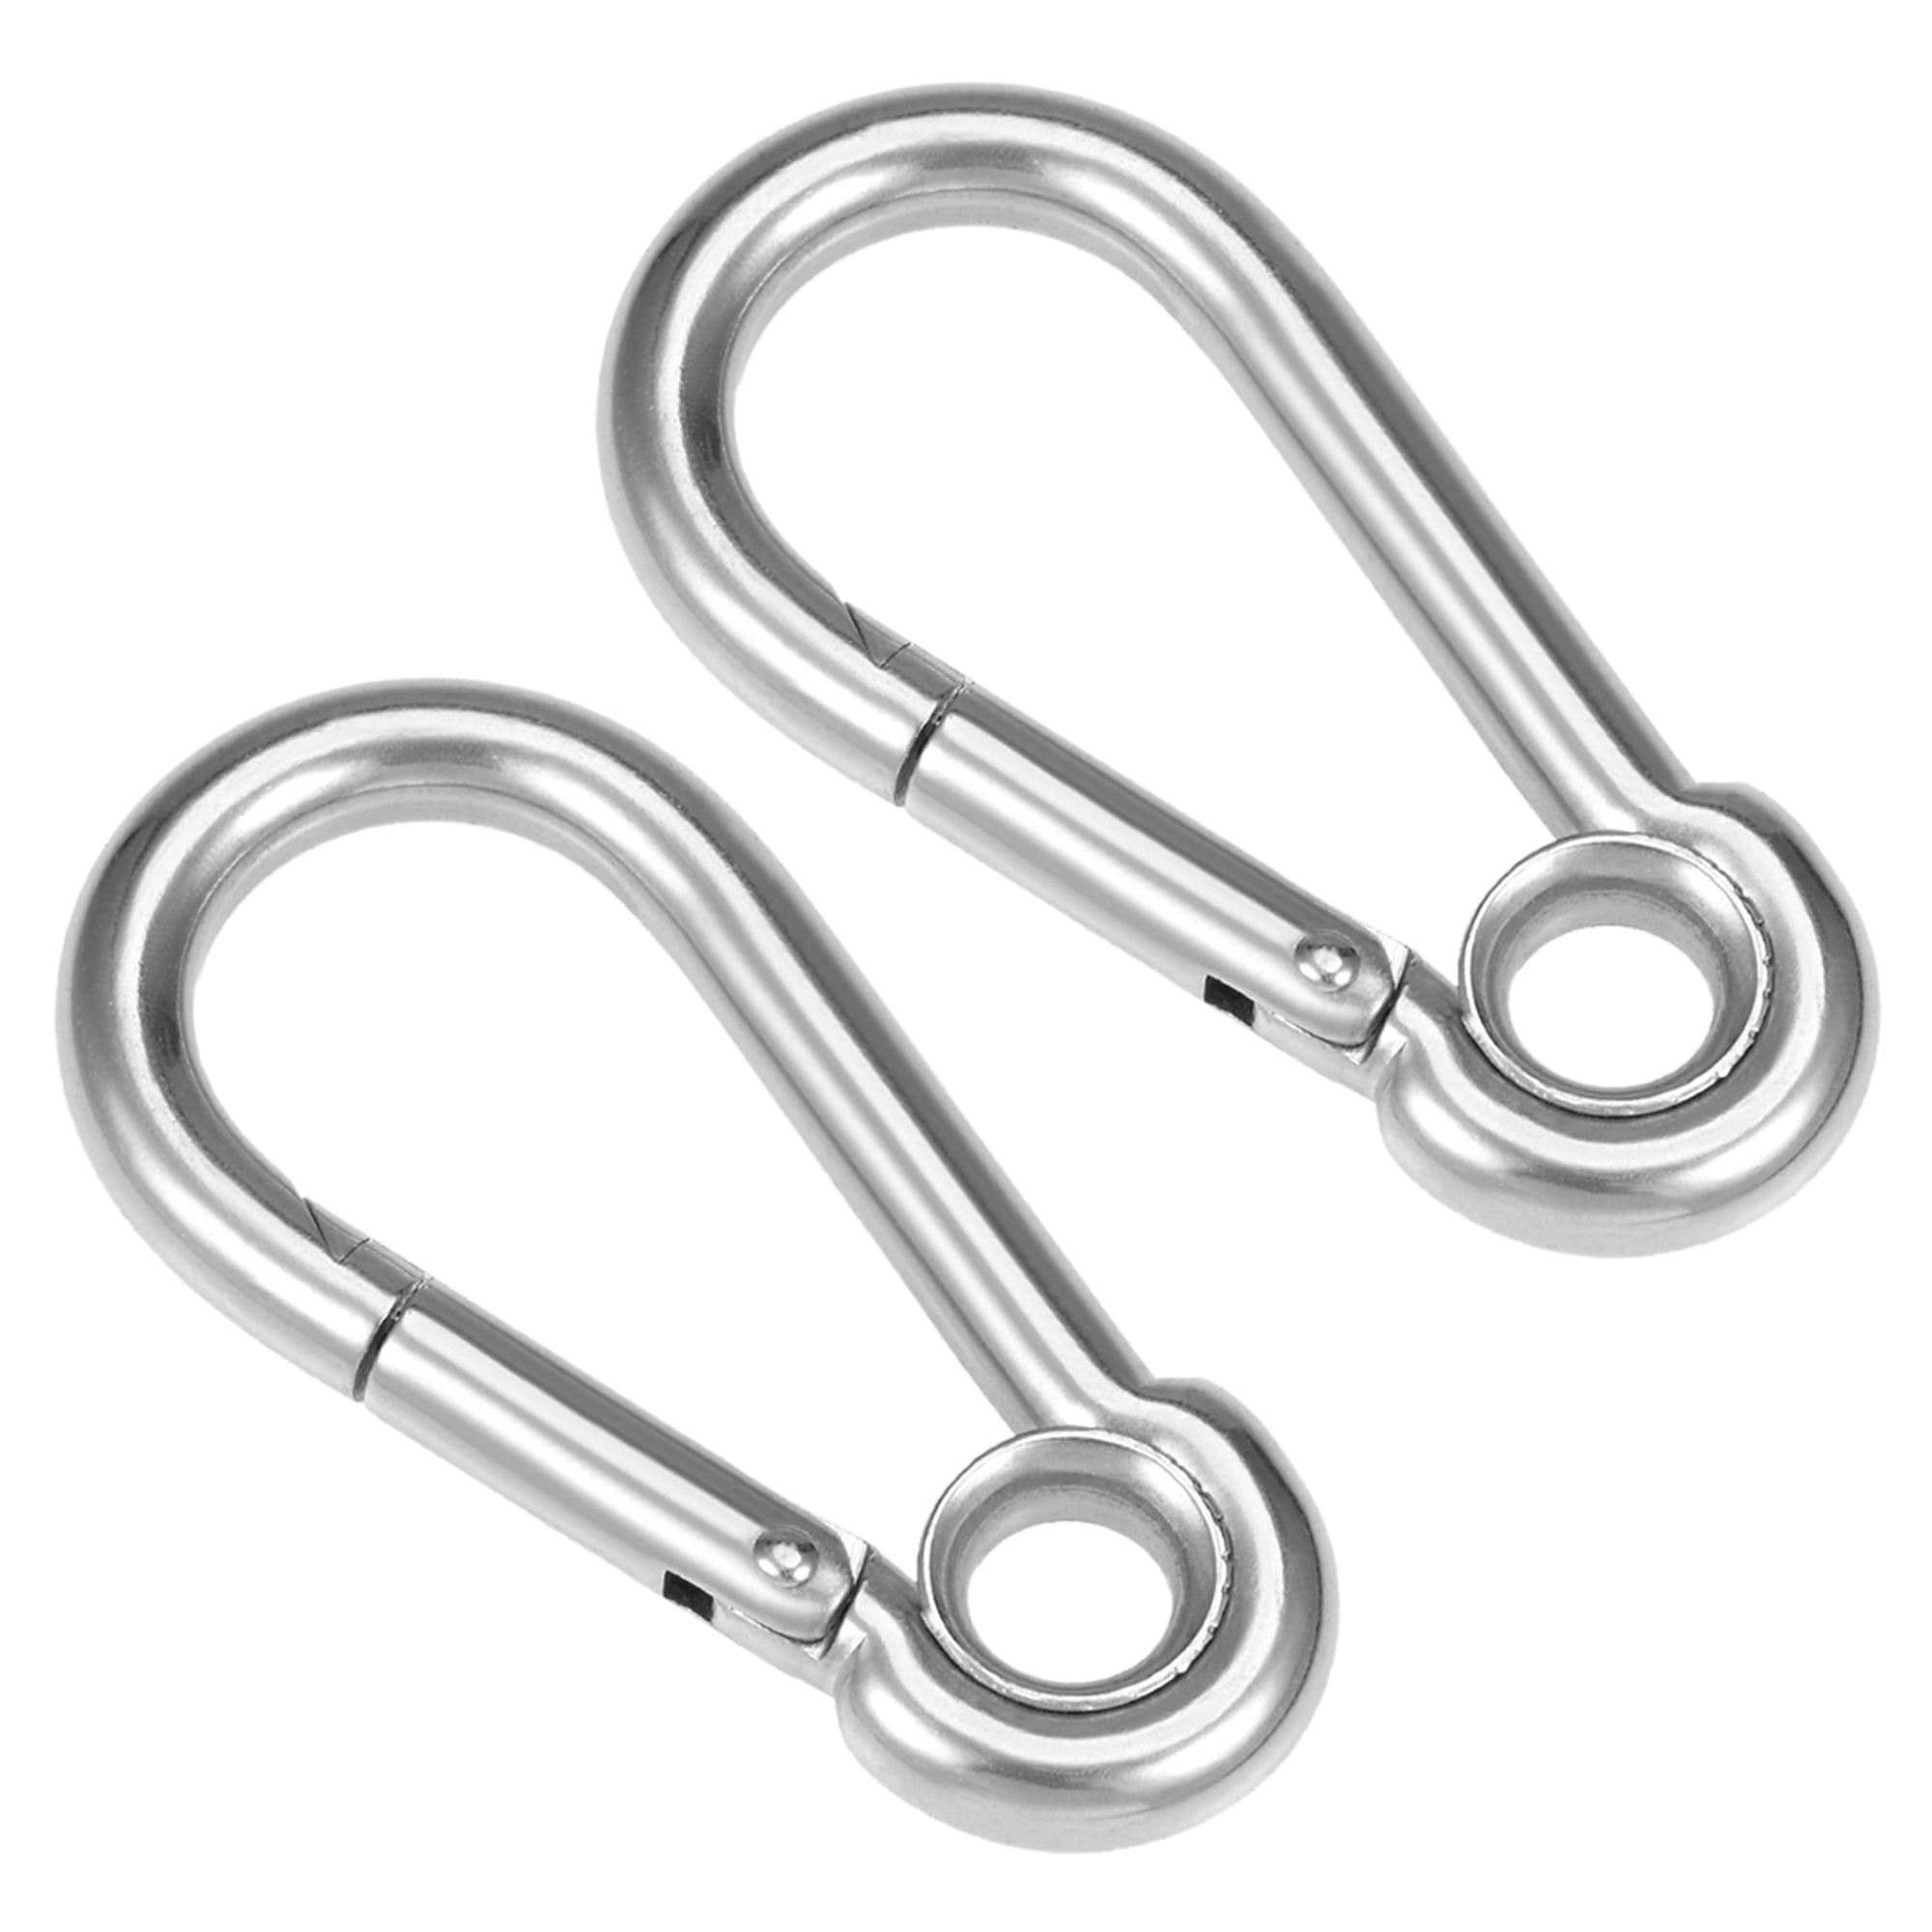 Stainless Steel Carabiner Spring Snap Link Hook Clip Keychain